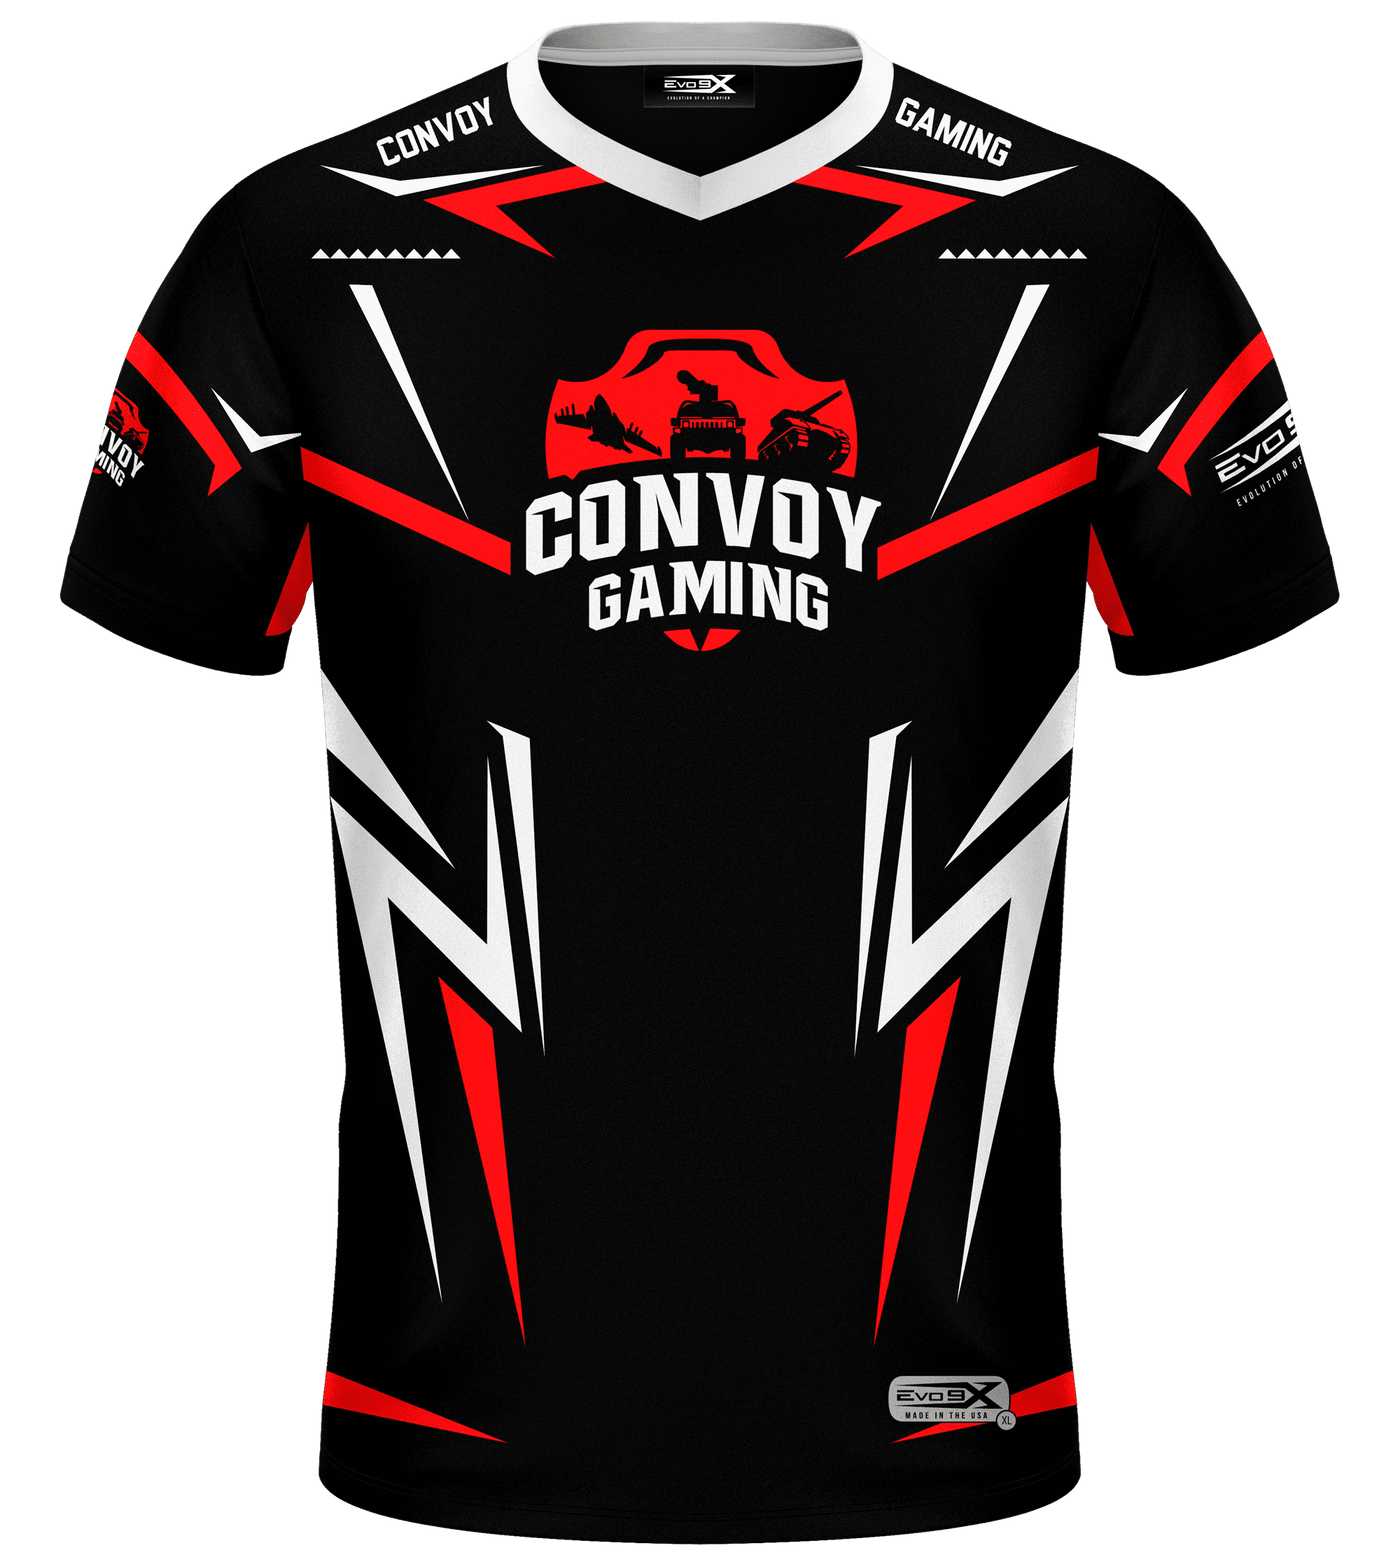 Convoy Gaming Premium Jersey